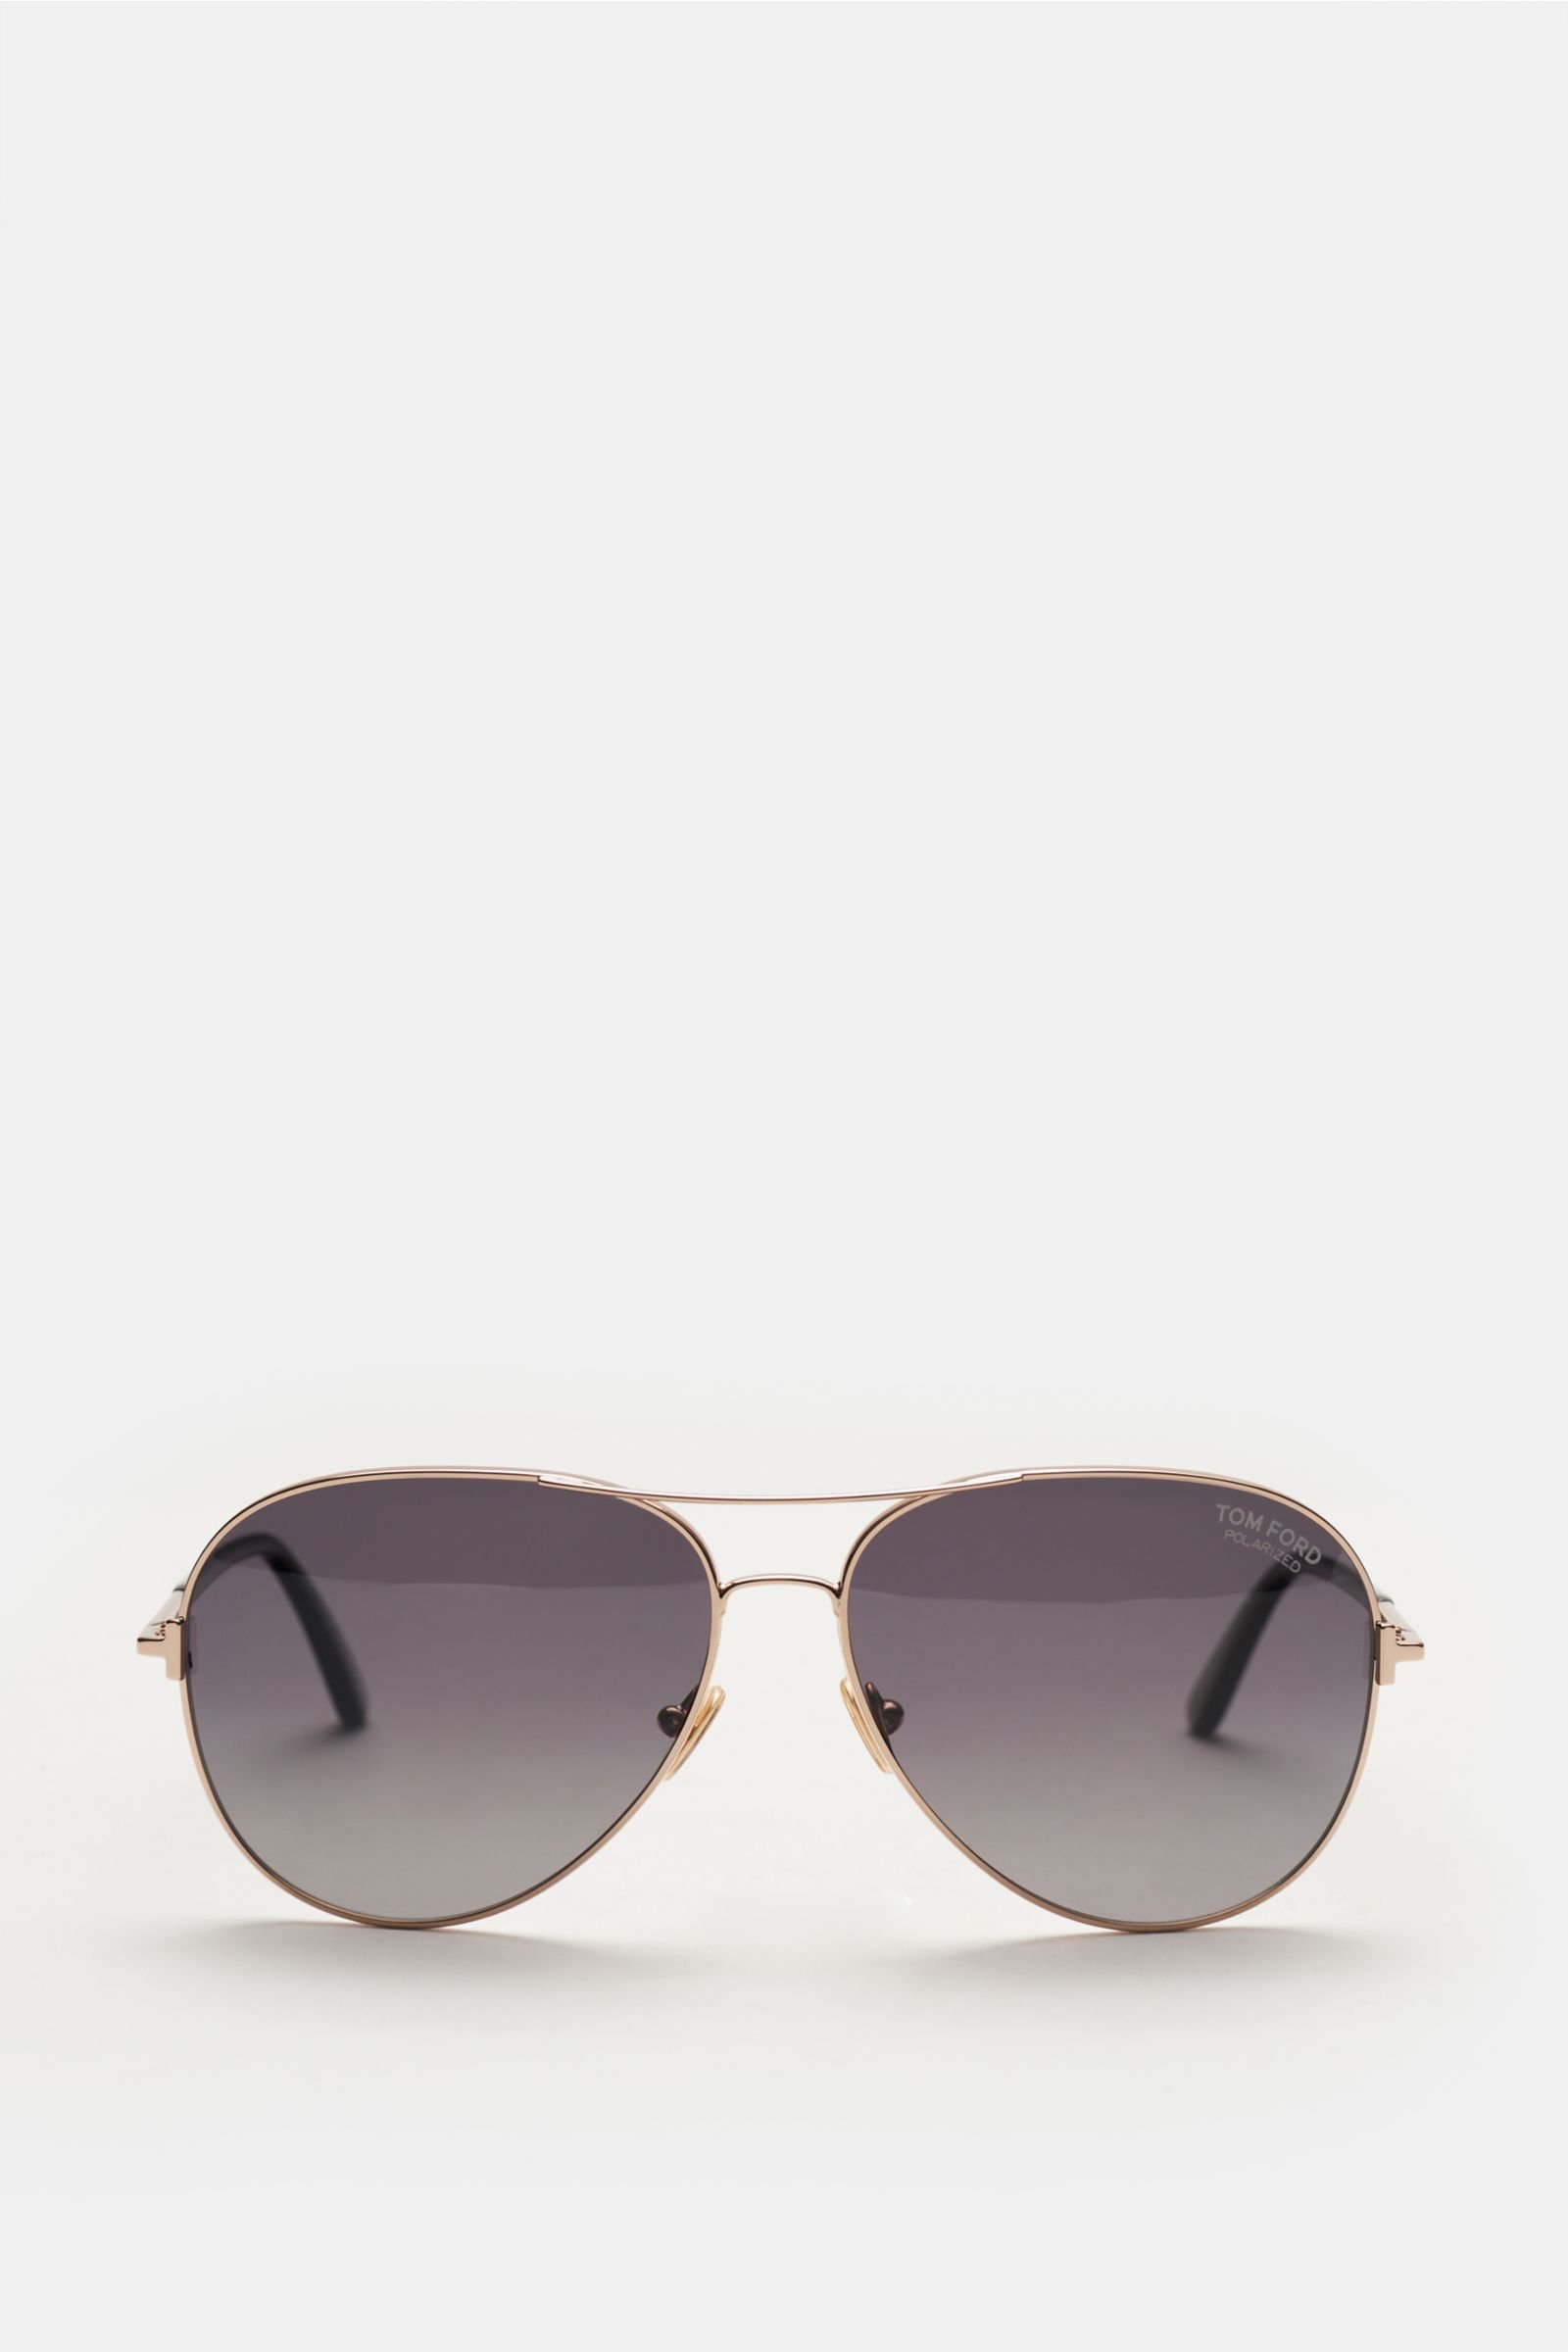 Sunglasses 'Clark' rose gold/grey